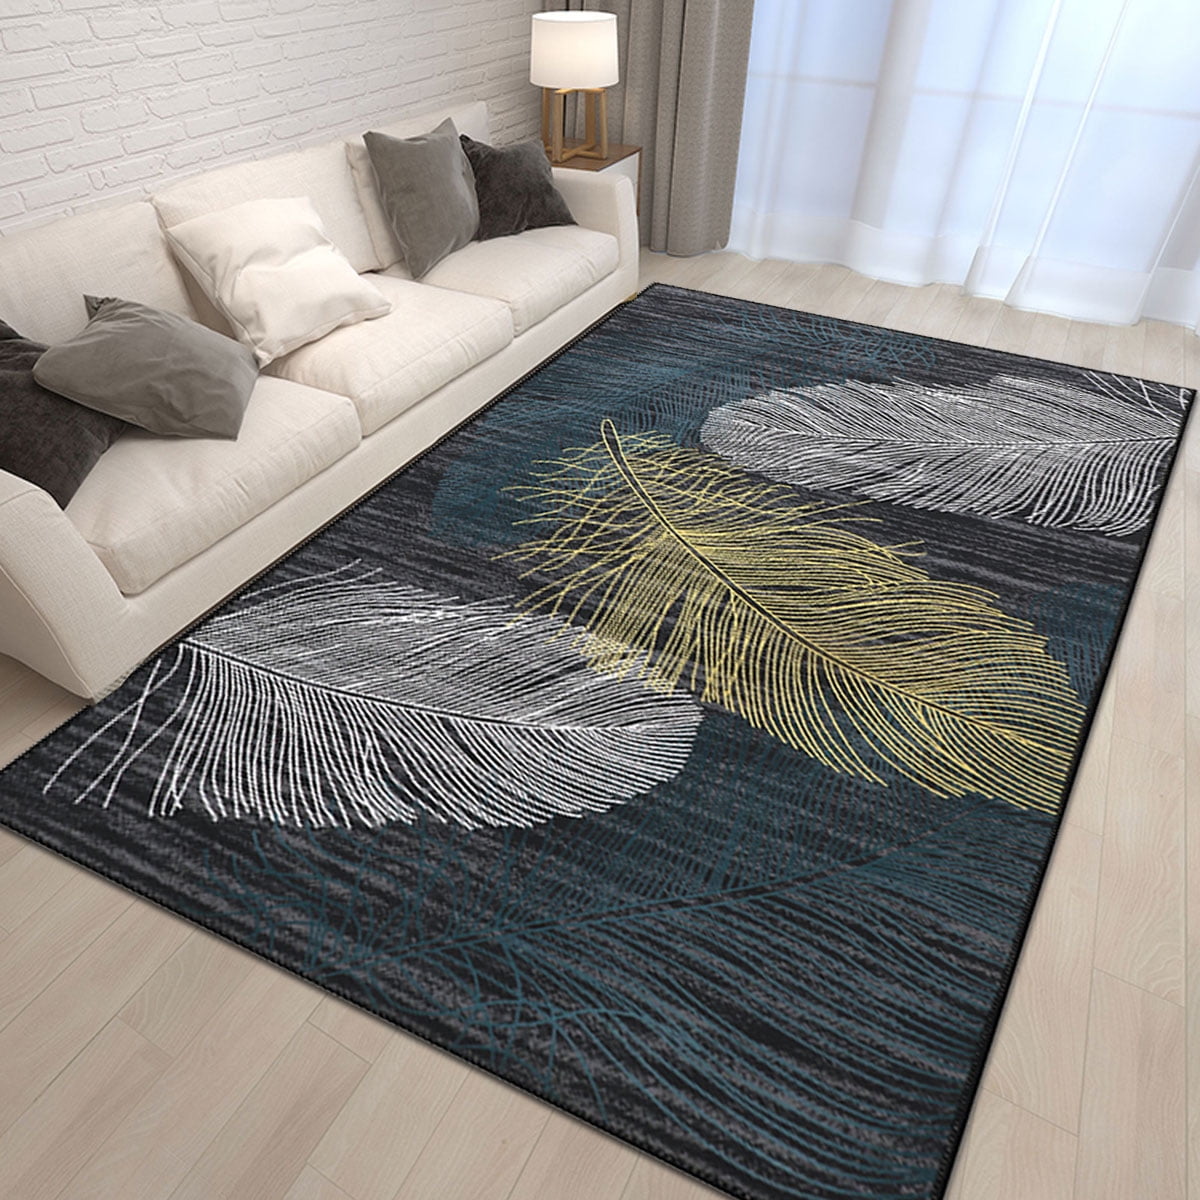 Modern Non Slip Area Rugs Long Hallway Runner Bedroom Rugs Kitchen Carpet Floor 